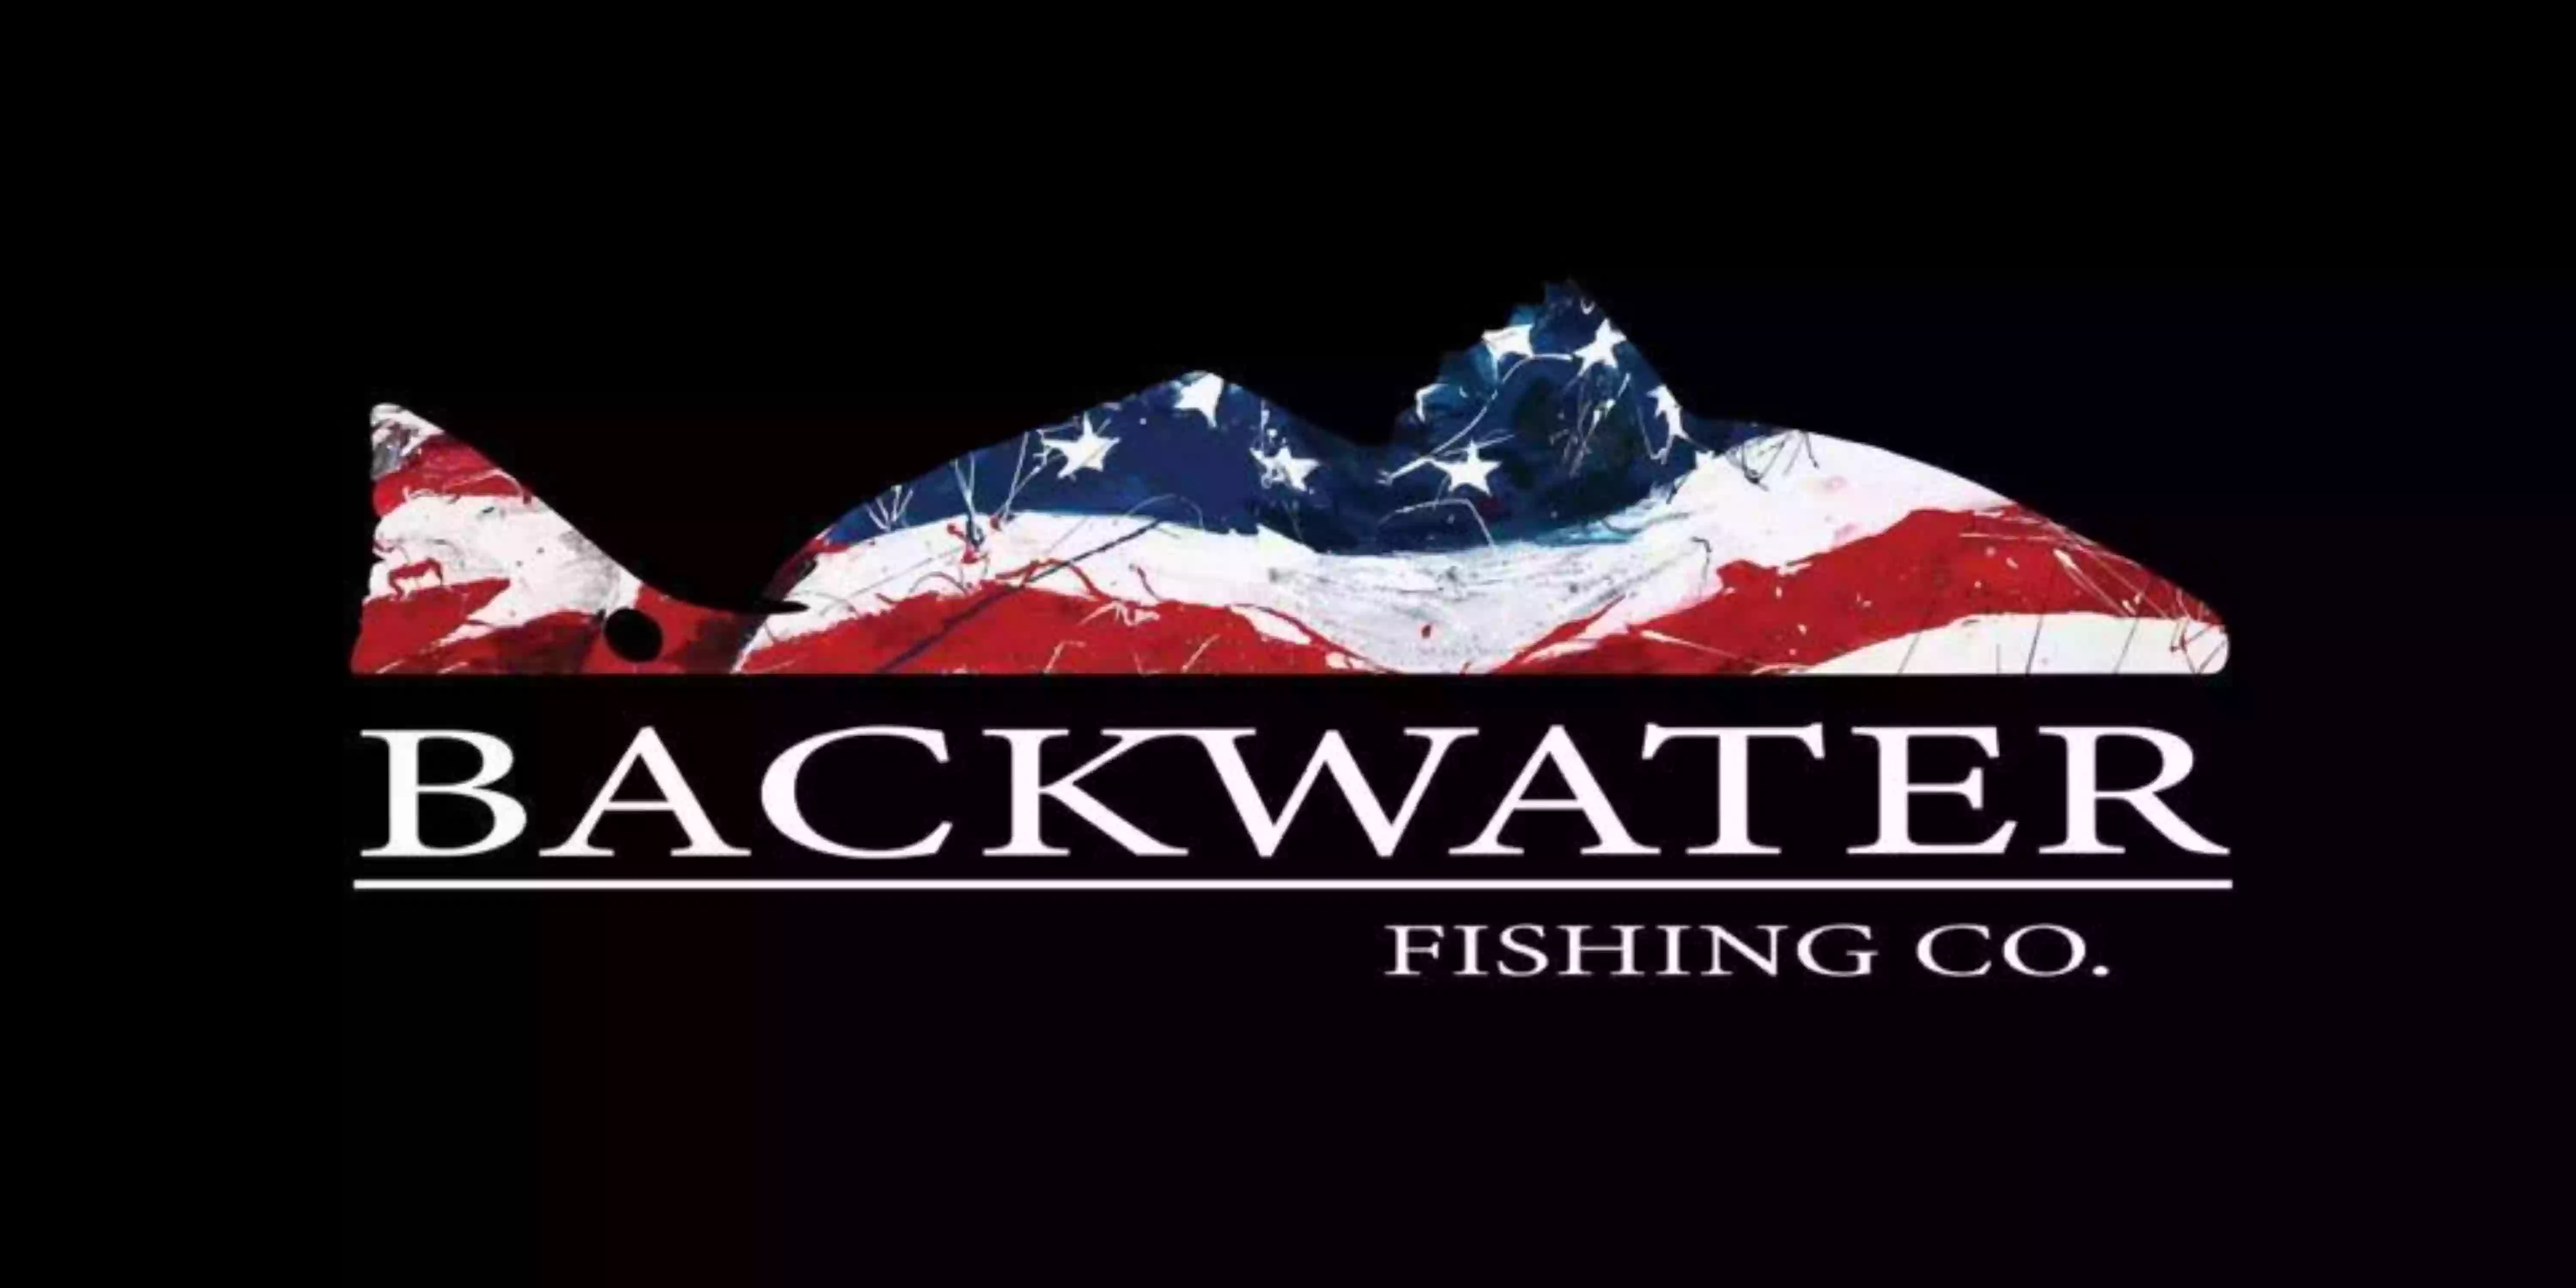 Backwater Fishing Co.